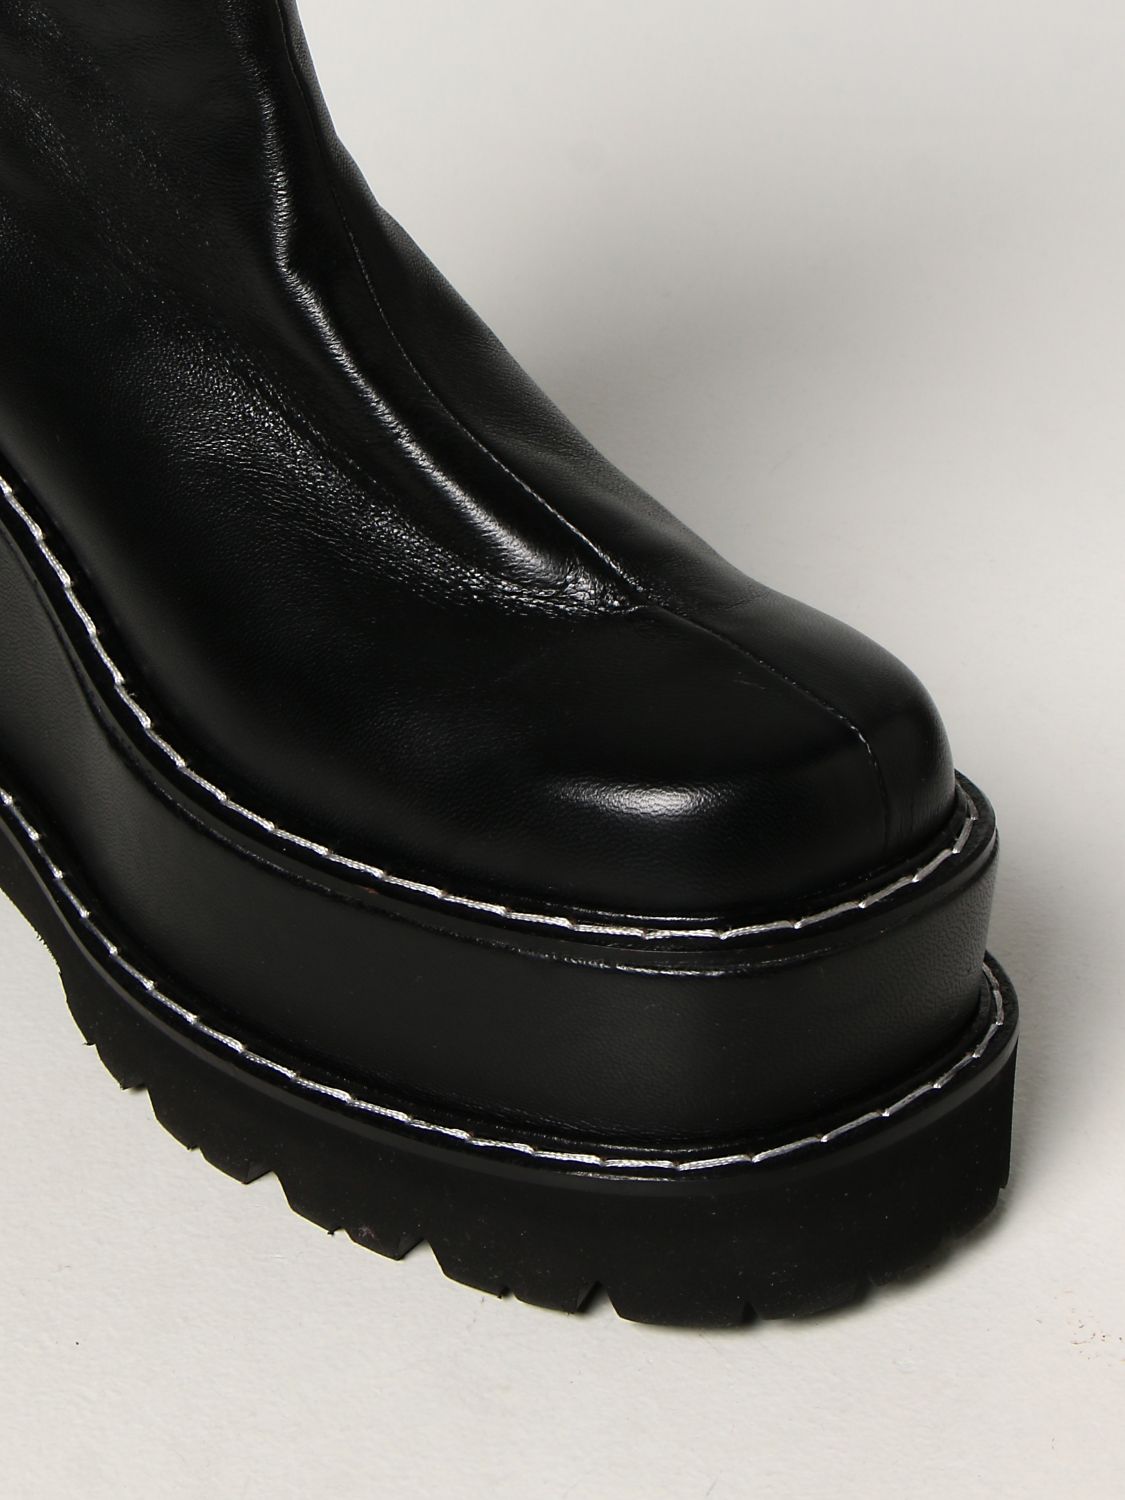 Bottines plates Msgm: Chaussures femme Msgm noir 4